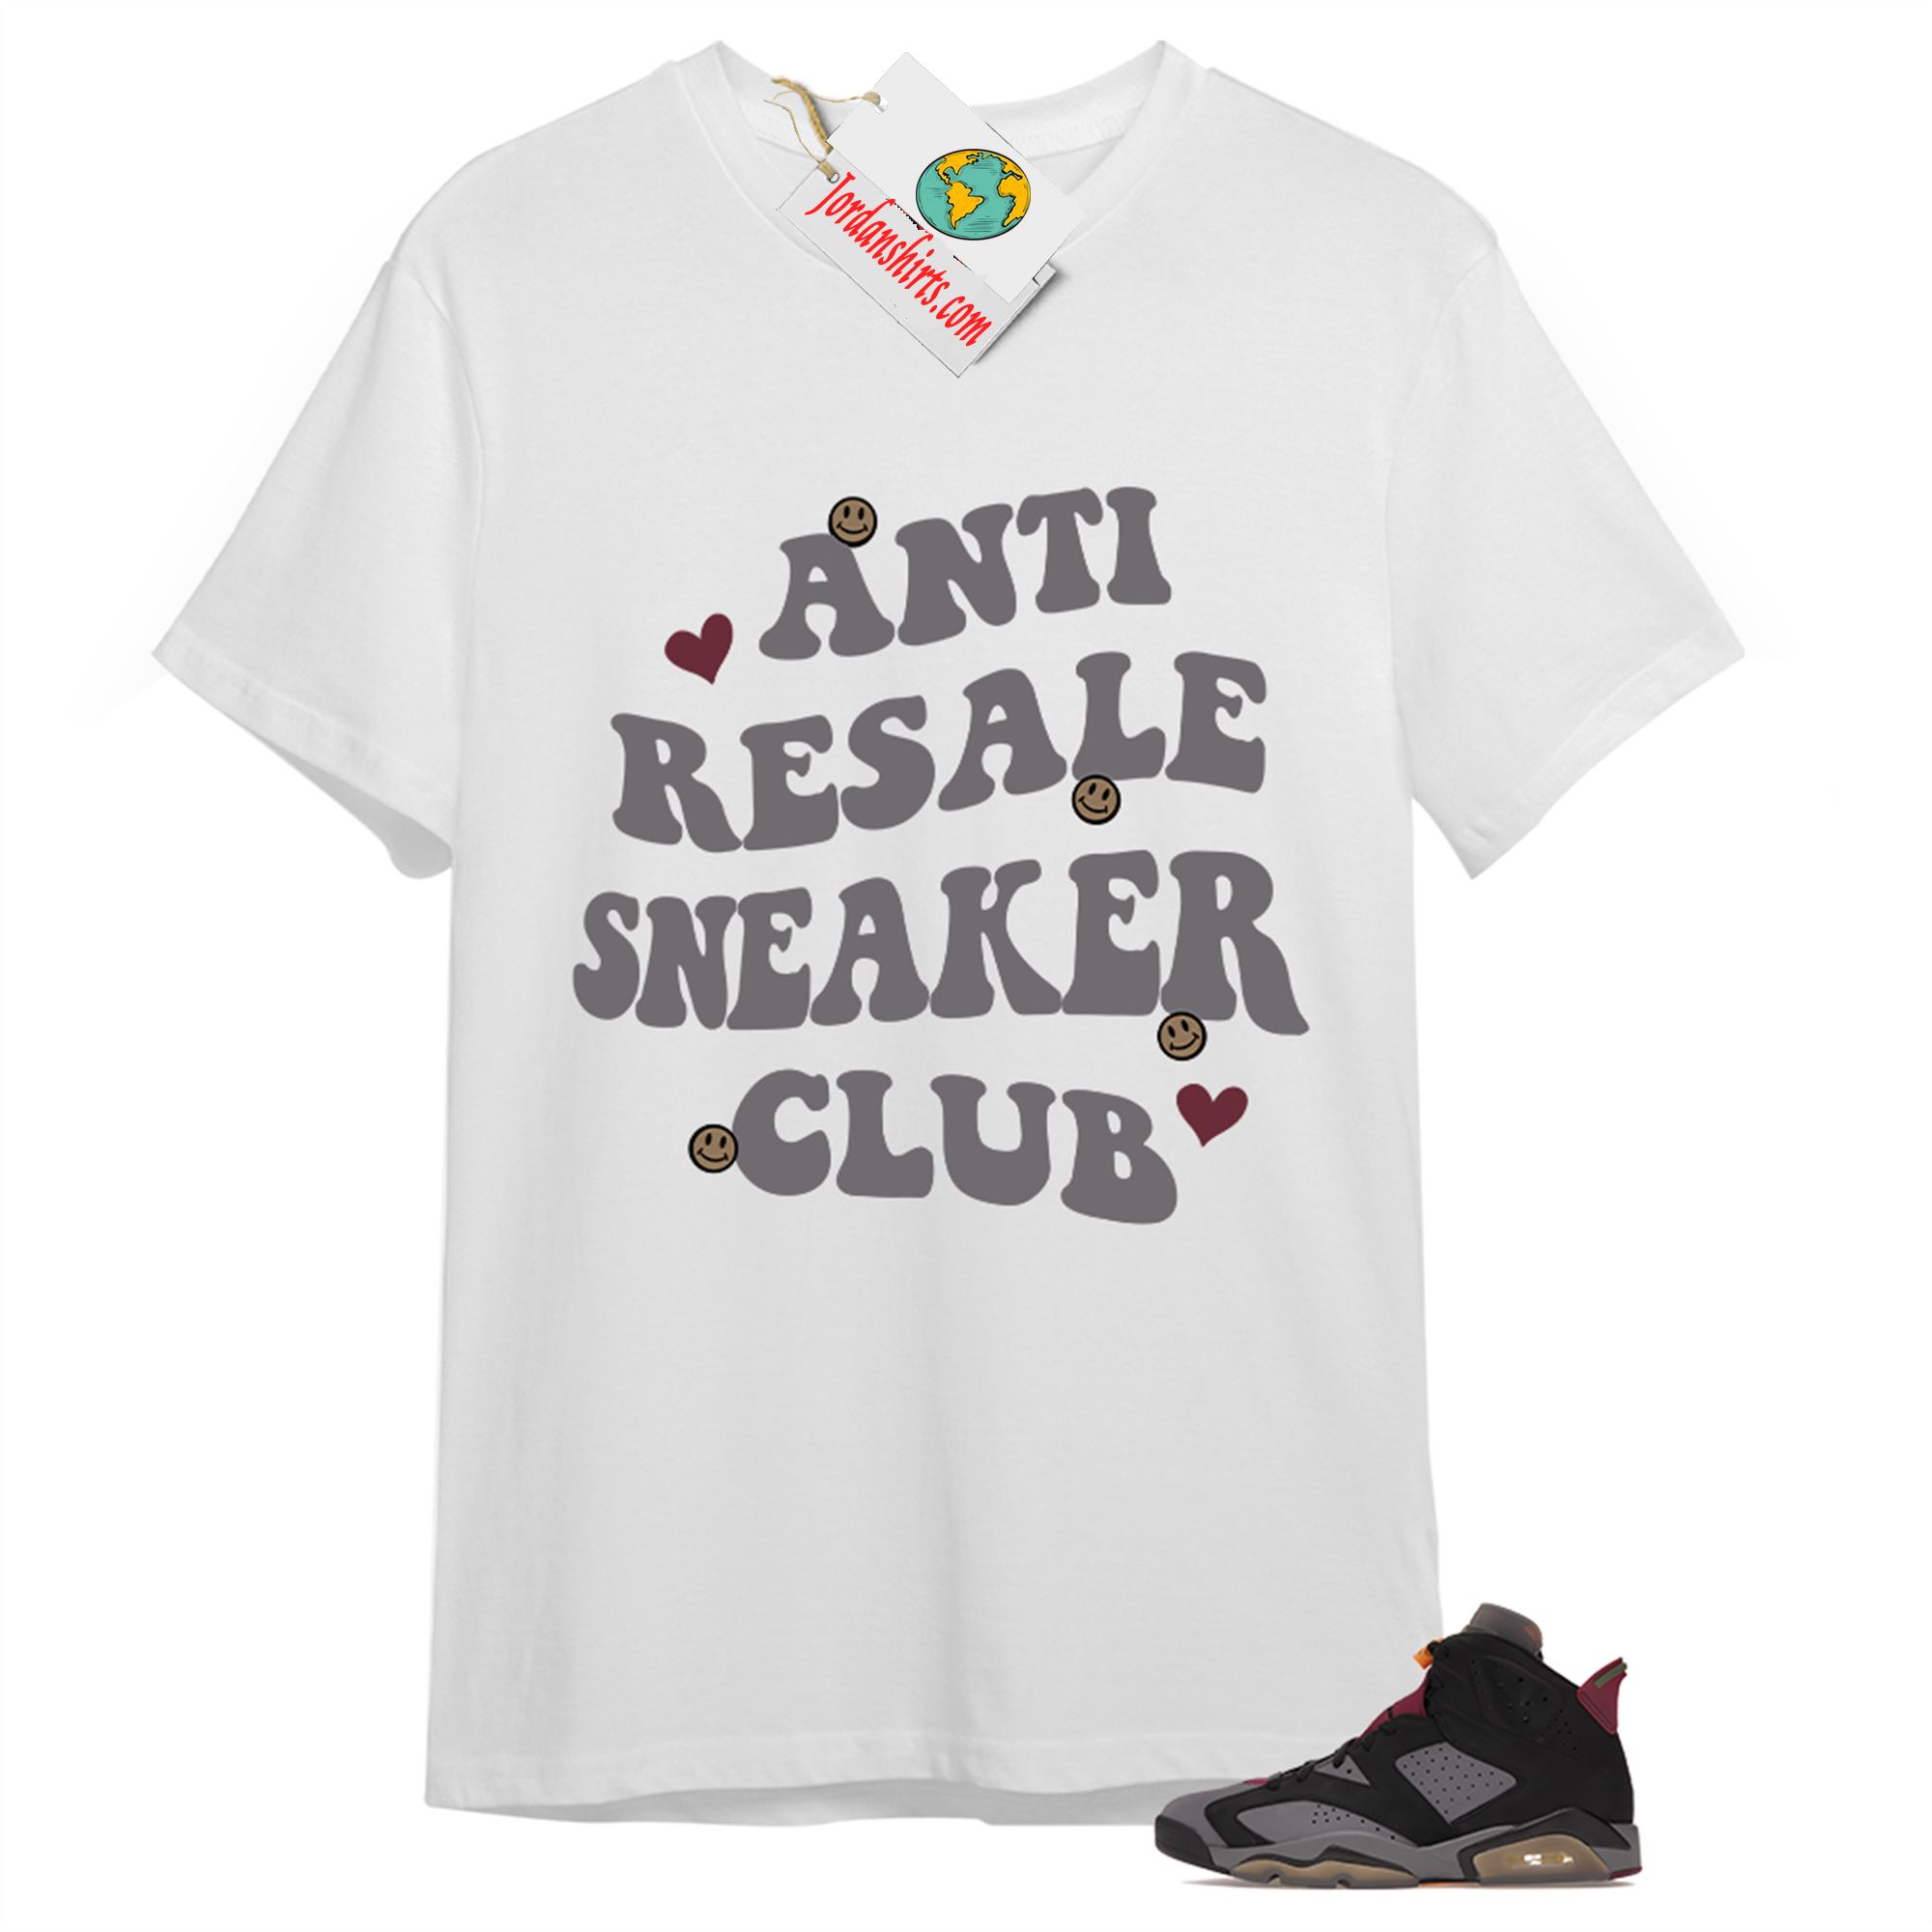 Jordan 6 Shirt, Anti Resale Sneaker Club White T-shirt Air Jordan 6 Bordeaux 6s Full Size Up To 5xl